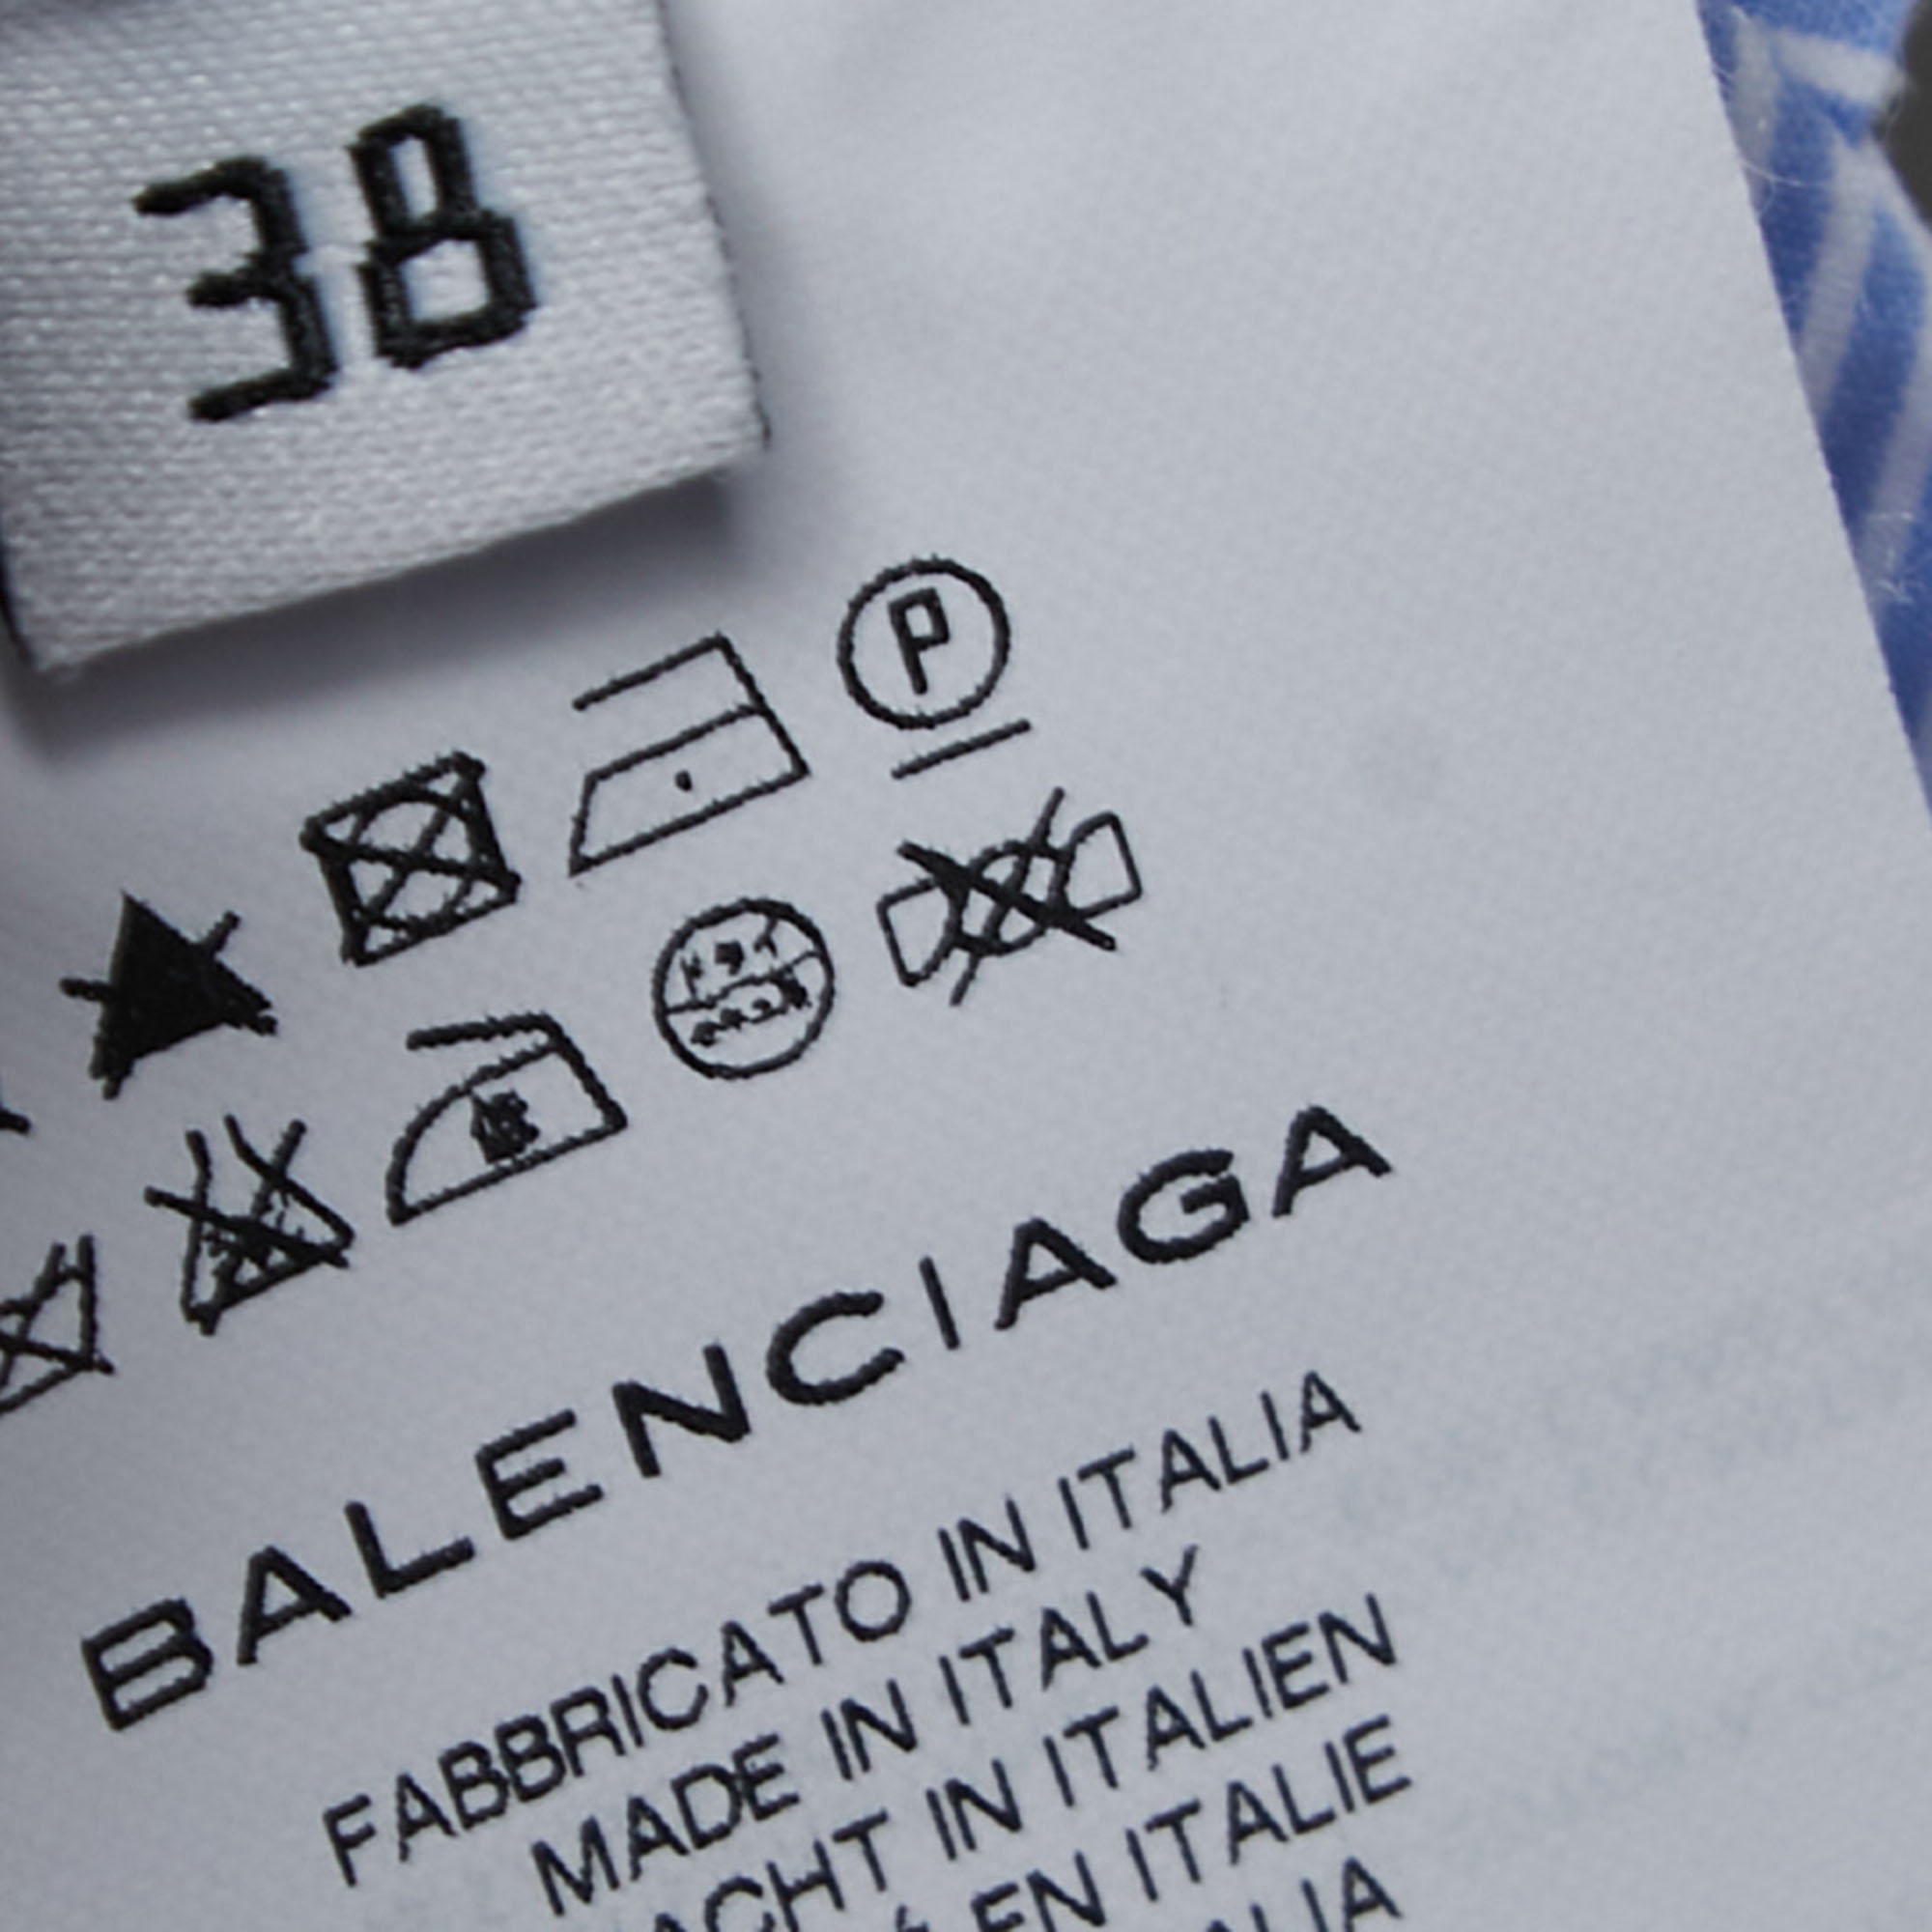 Balenciaga Blue/White Striped Cotton Paneled Shirt M